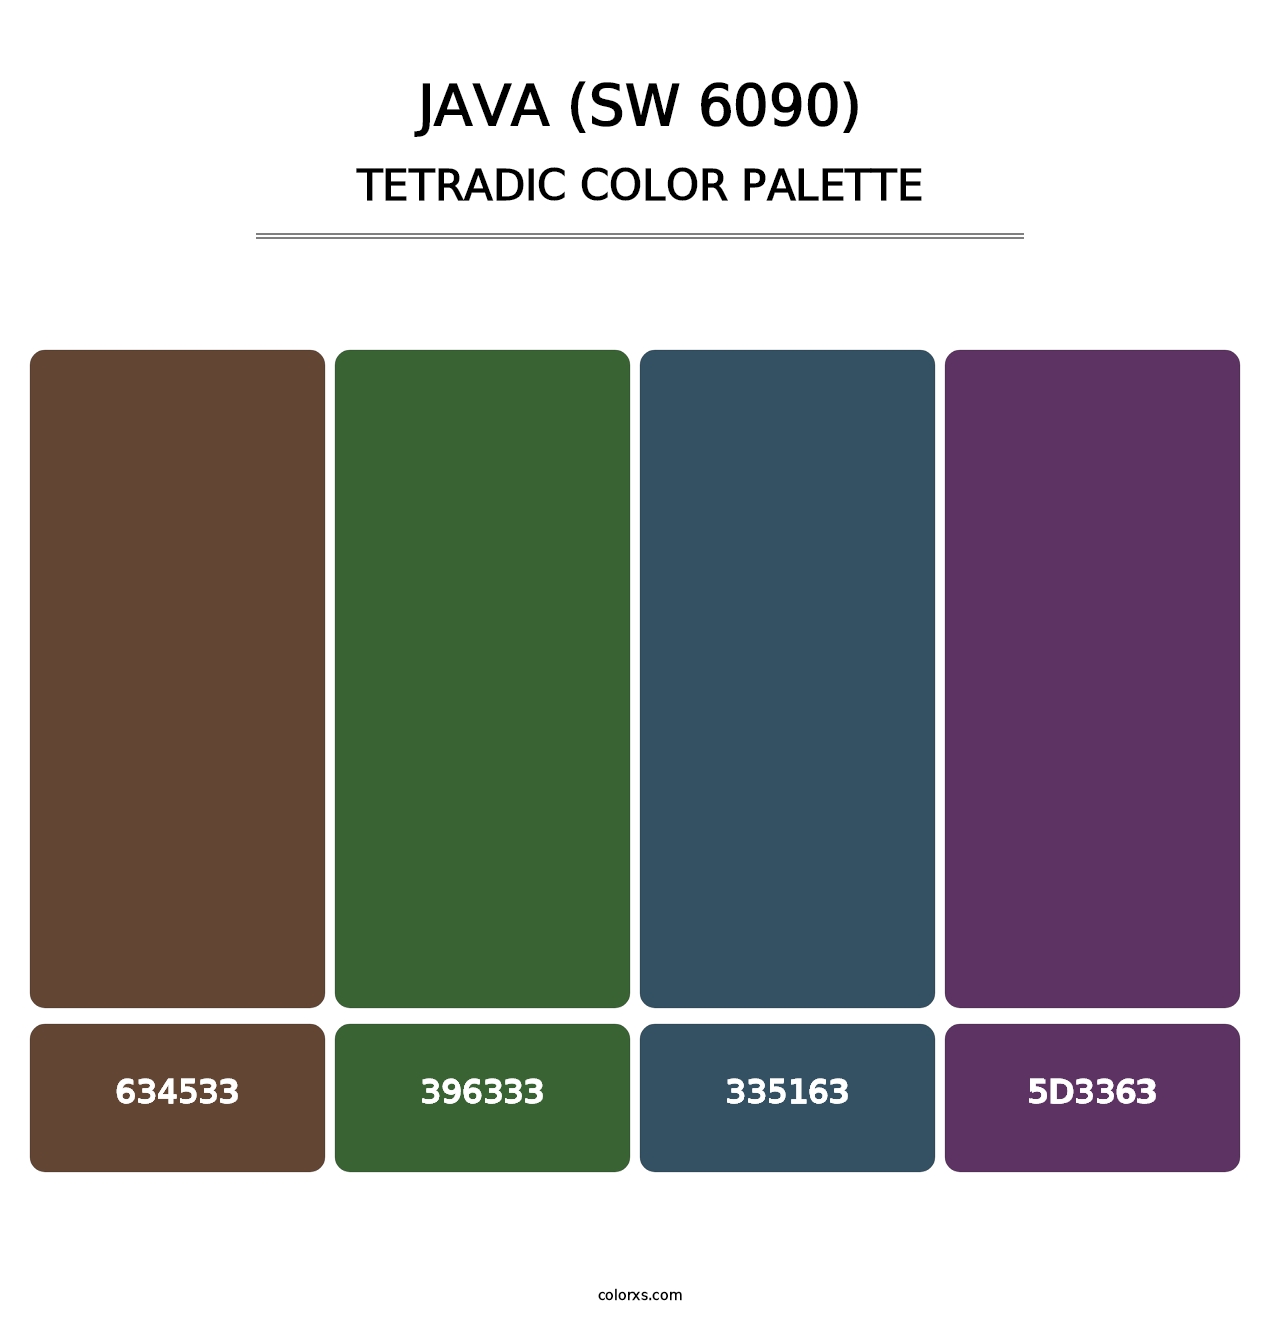 Java (SW 6090) - Tetradic Color Palette